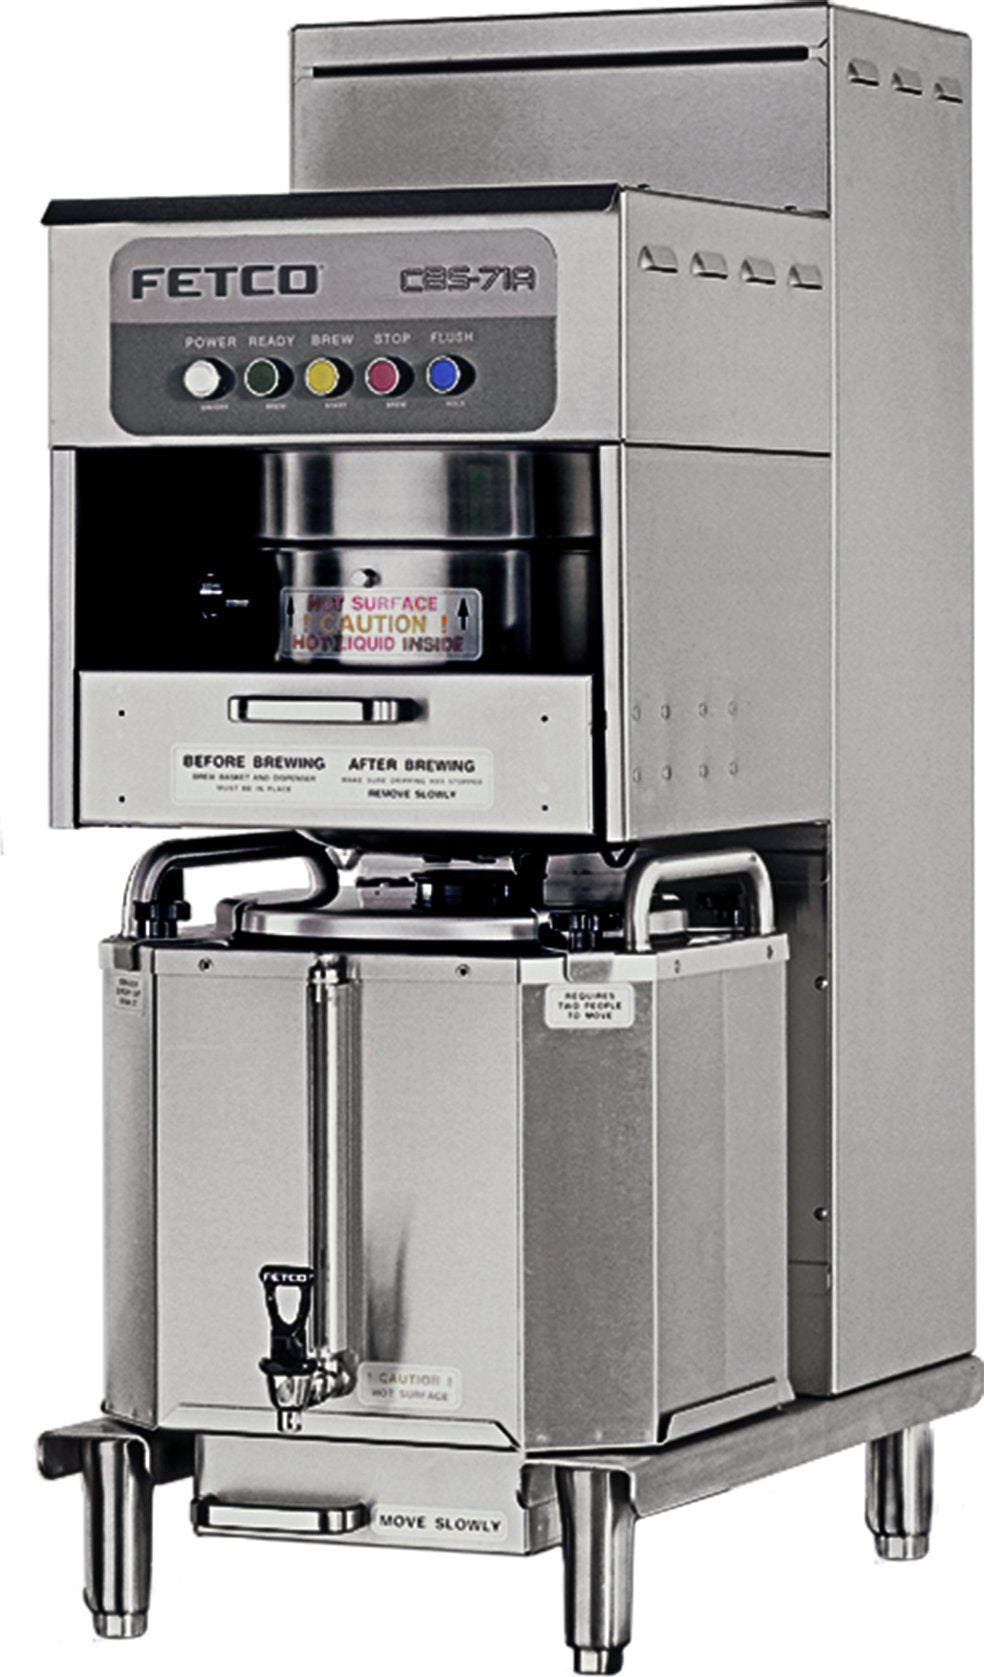 Fetco - High Volume Single Station Coffee Brewing System 3 x 5 kW (120/208-240V) - CBS-71A